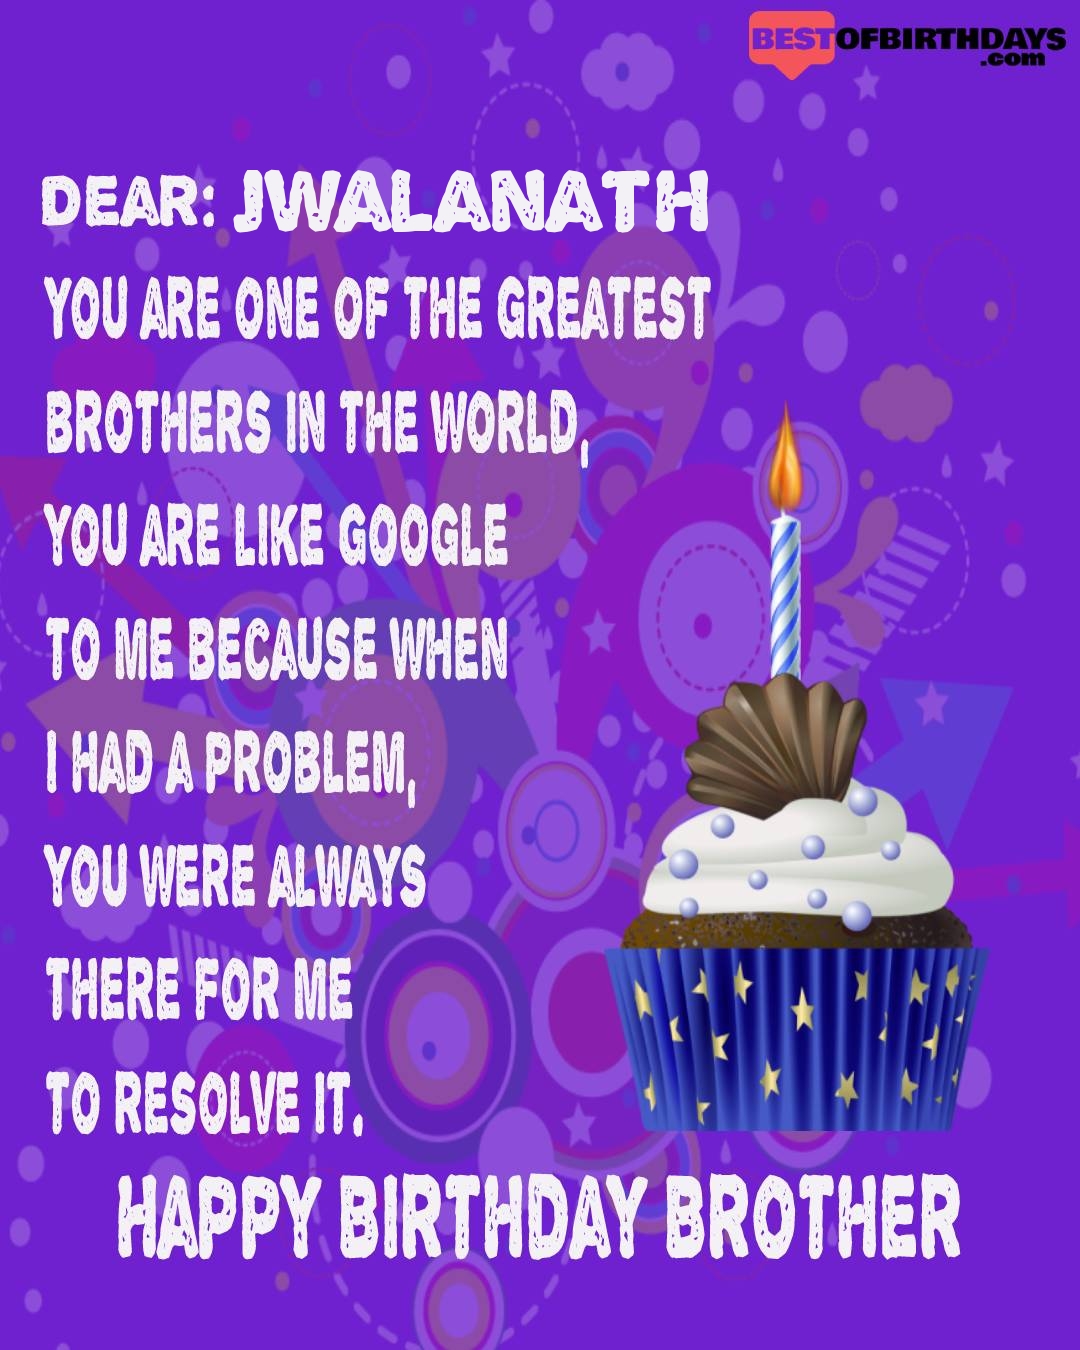 Happy birthday jwalanath bhai brother bro